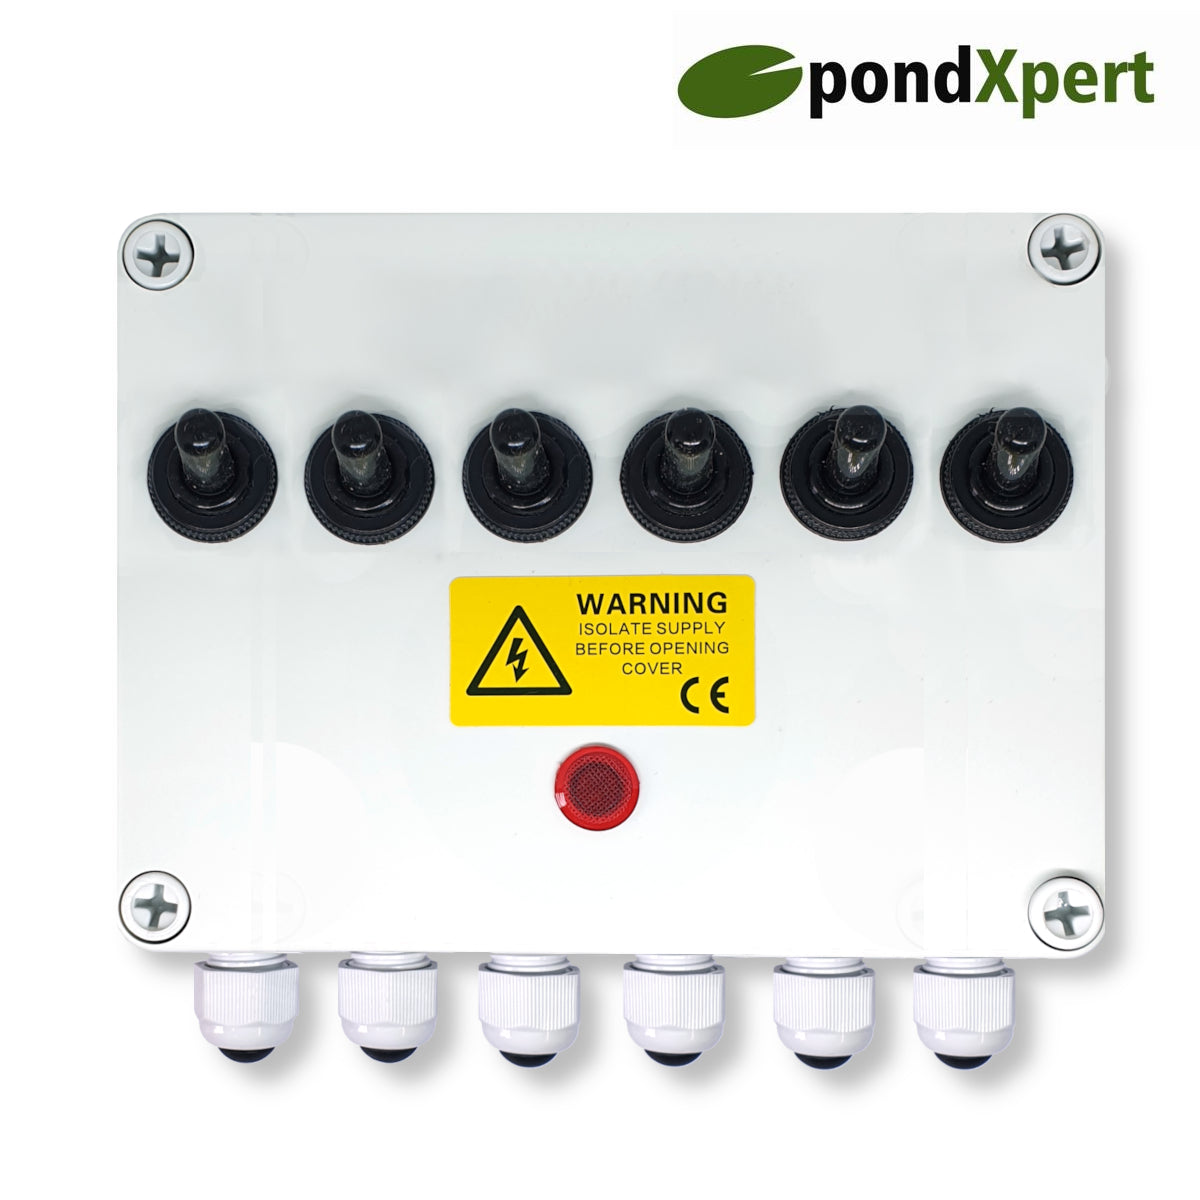 PondXpert EasySwitch 6 way Electrical Switch Box